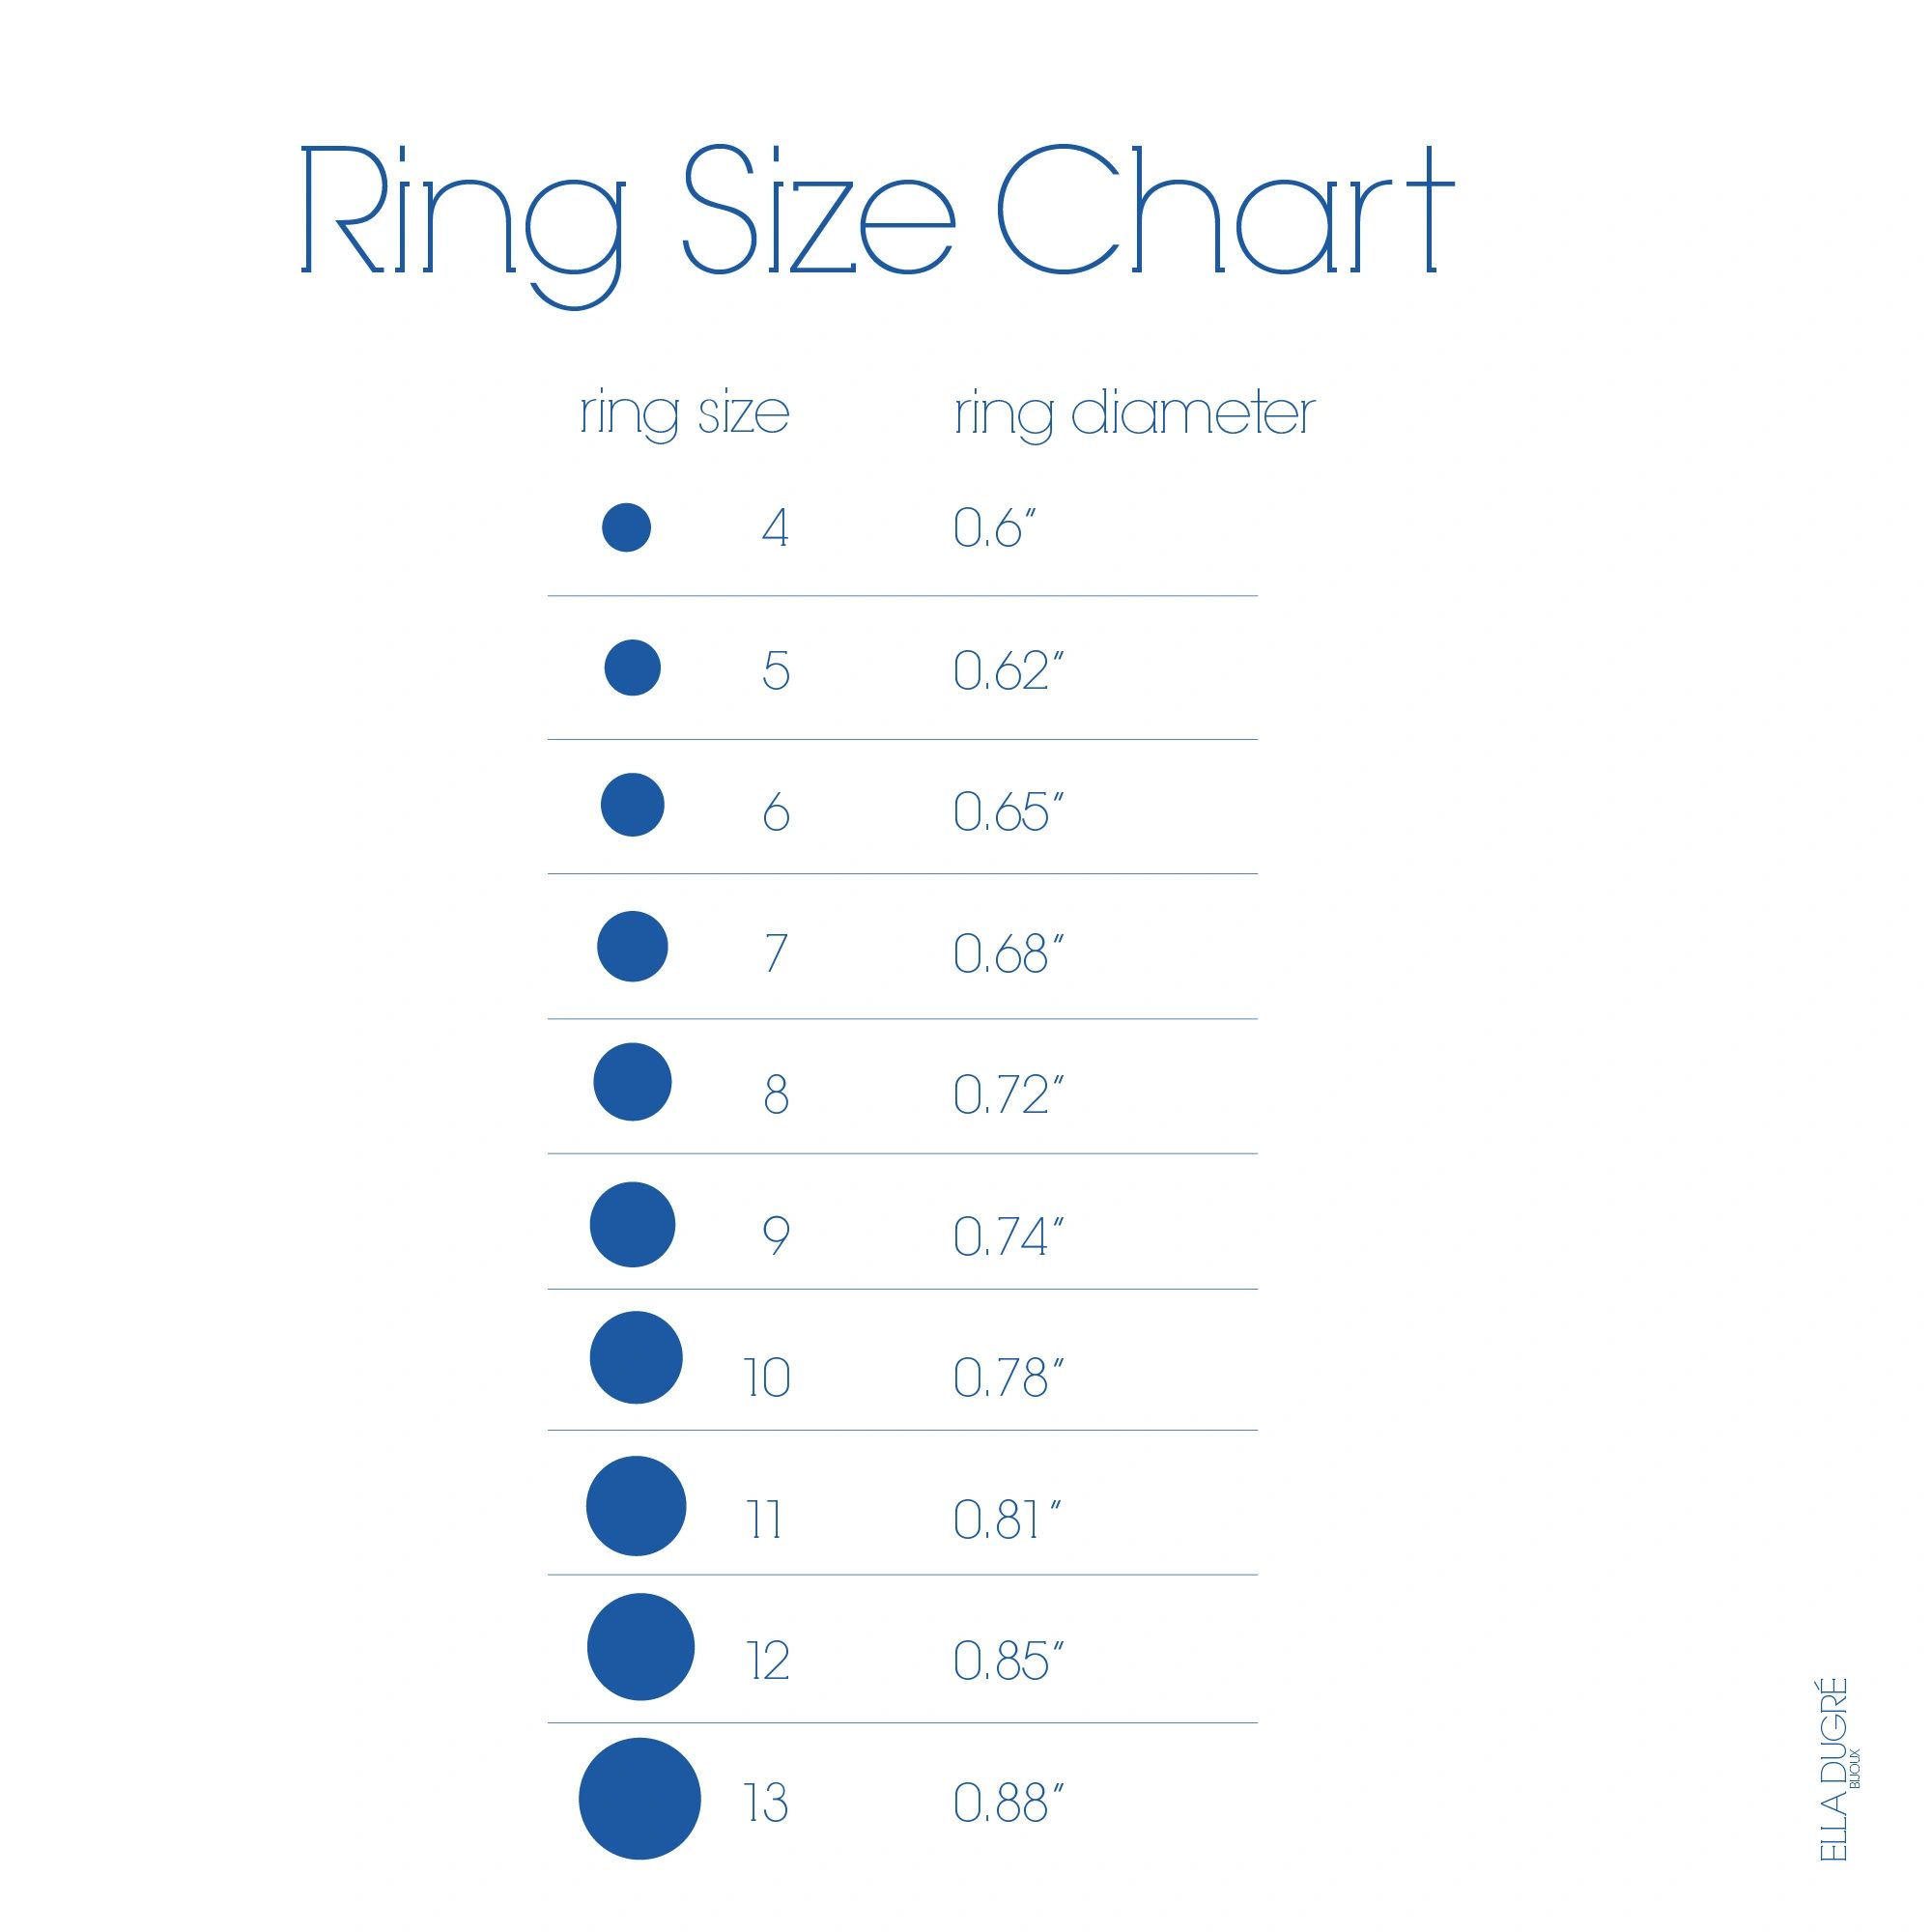 Ring Size Chart
Ella Dugre